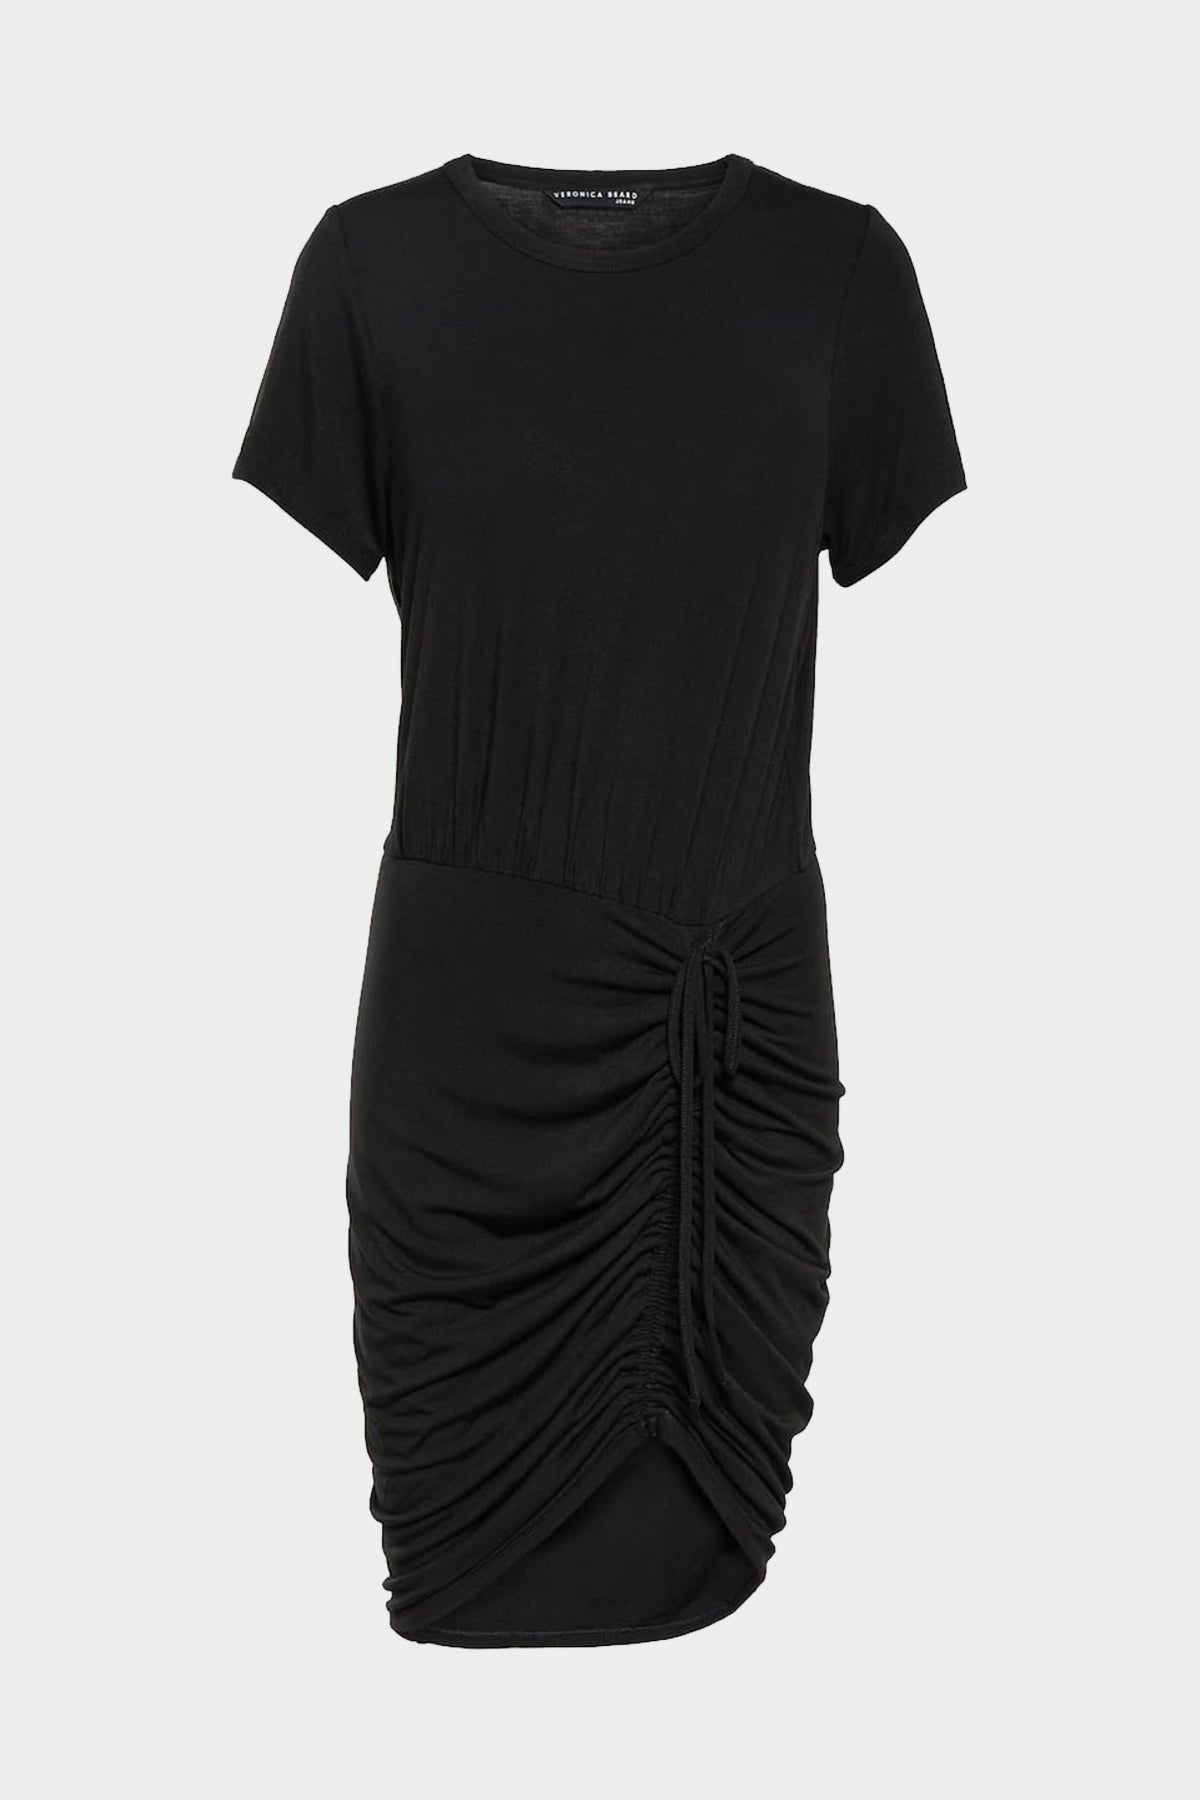 Hannock Dress in Black - shop-olivia.com